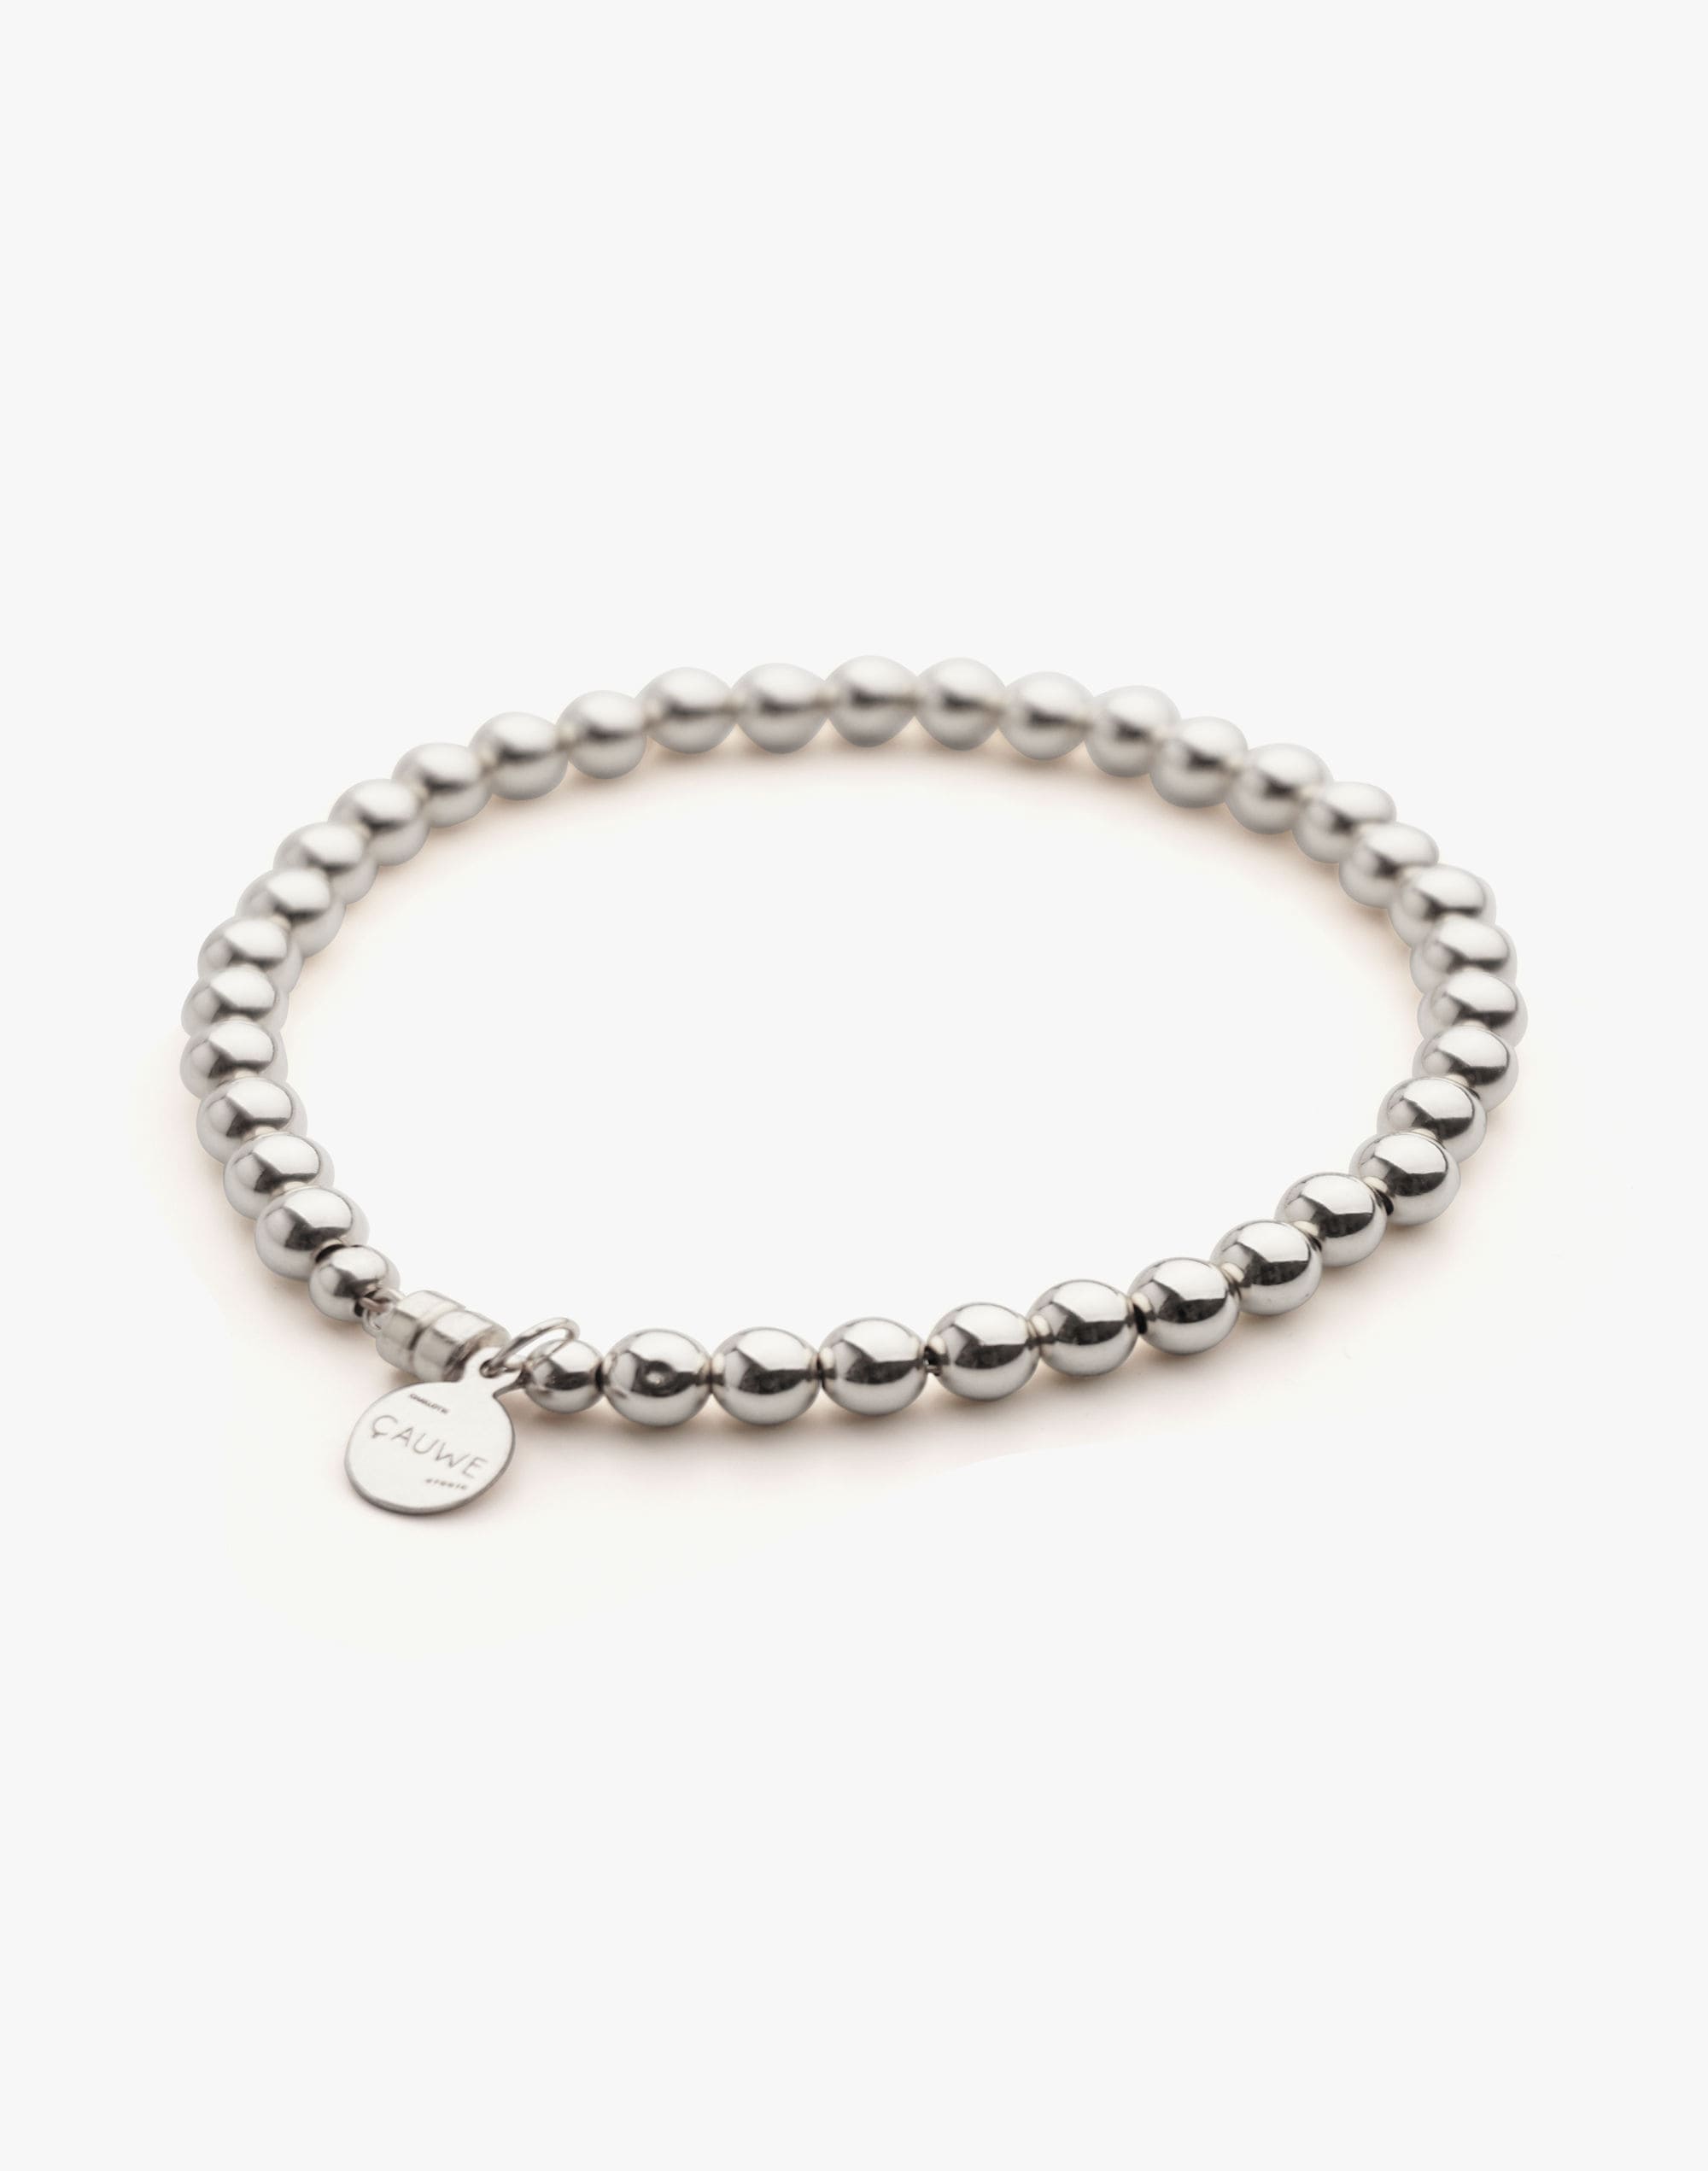 Charlotte Cauwe Studio Bead Bracelet in Sterling Silver 5mm